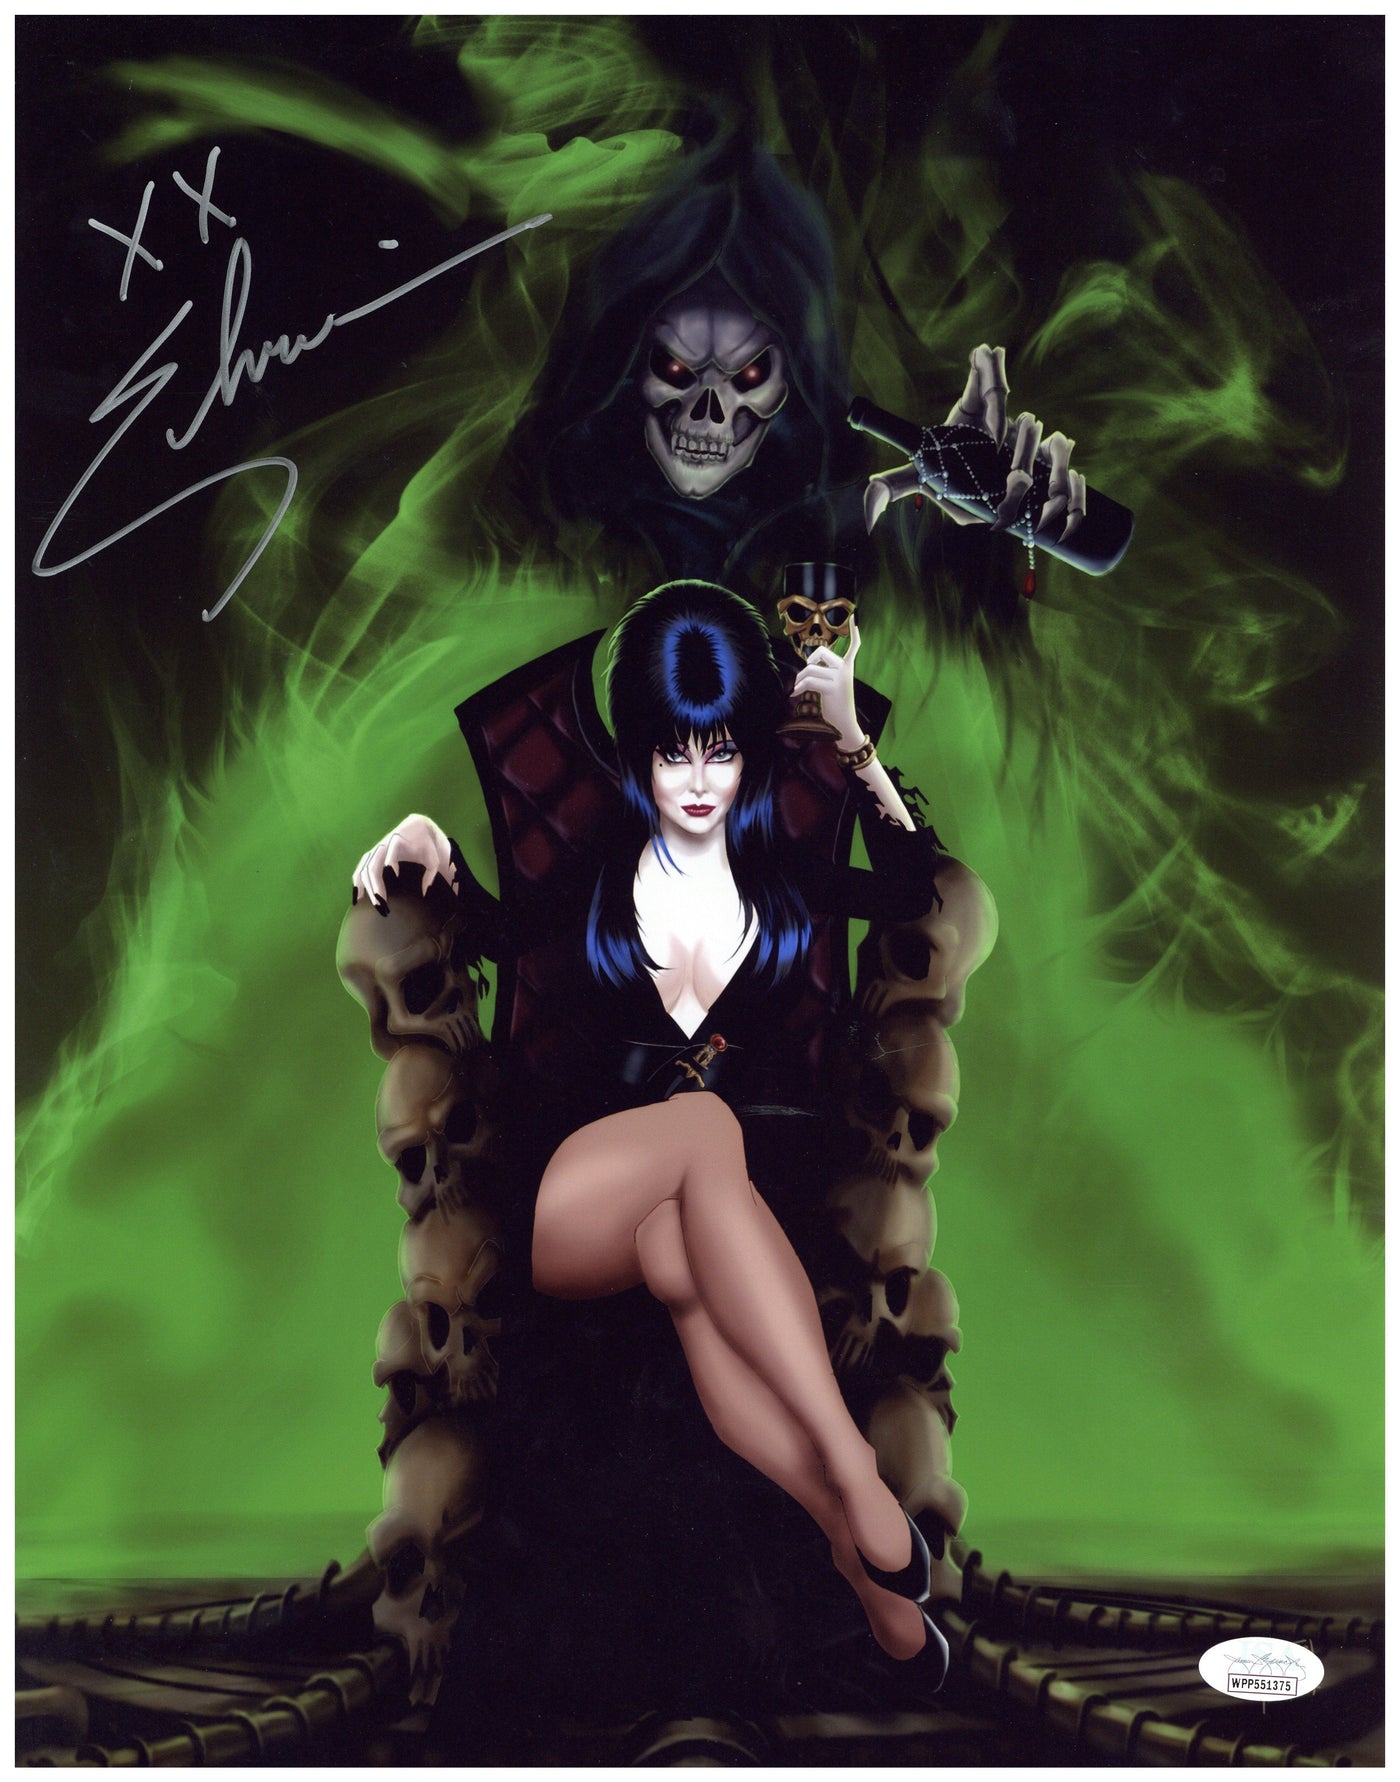 Elvira Signed 11x14 Photo Mistress of the Dark Authentic Autographed JSA COA